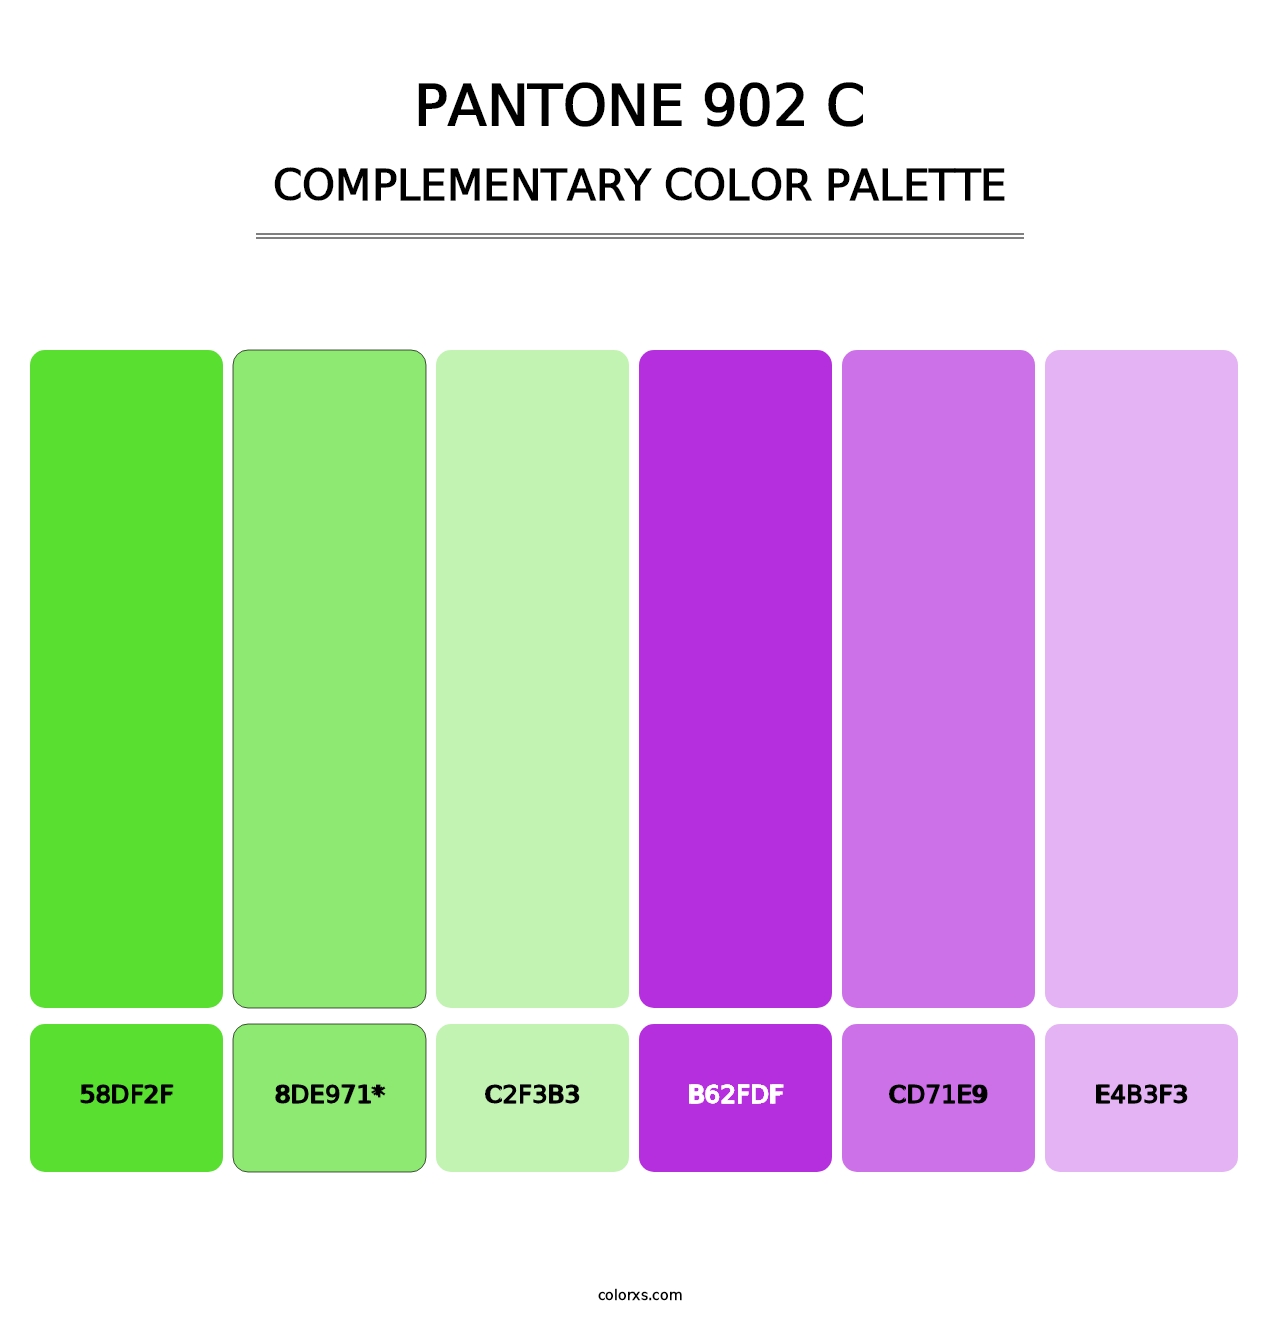 PANTONE 902 C - Complementary Color Palette